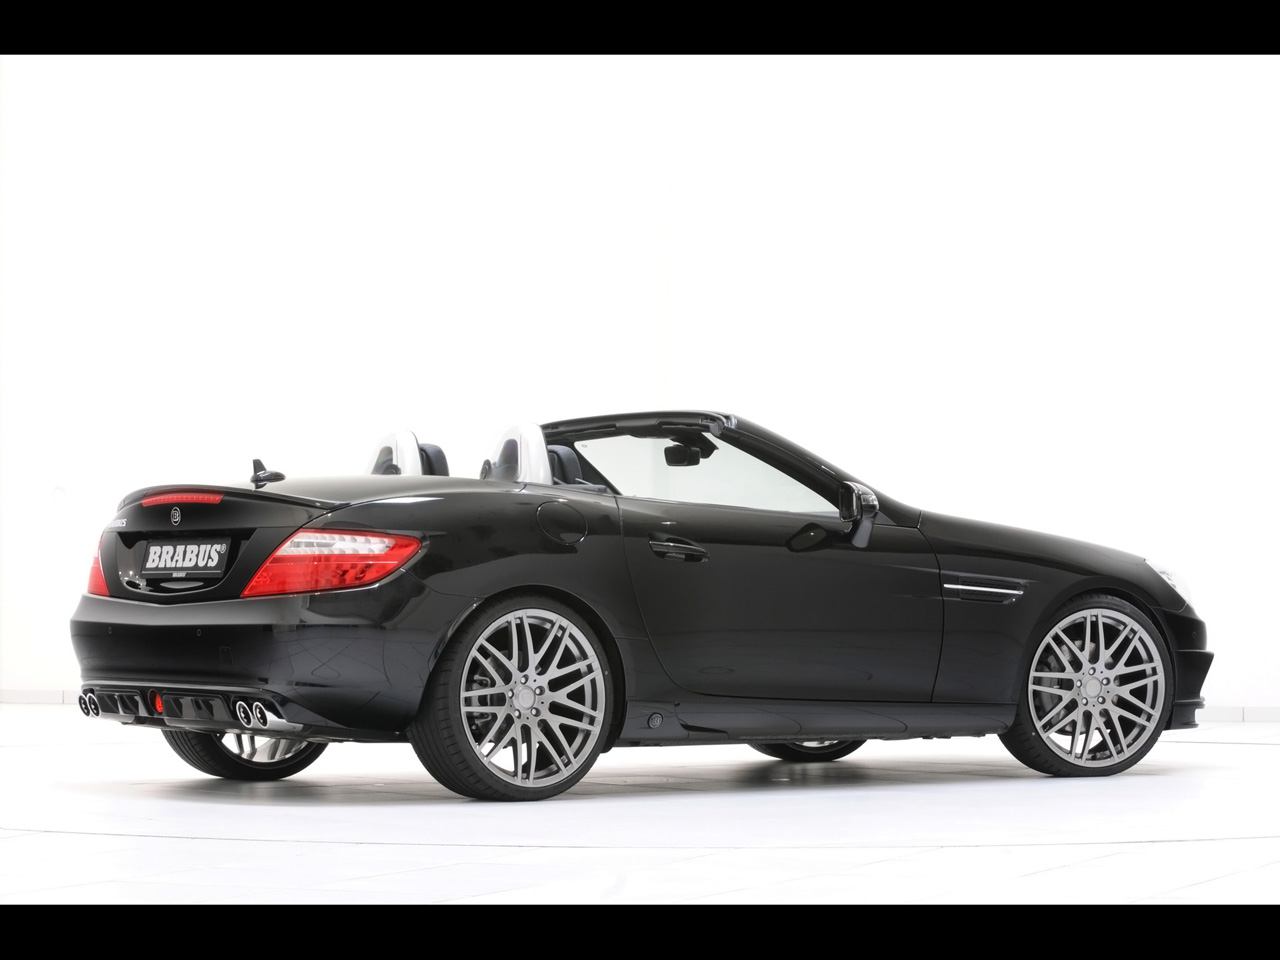 14411287712011-Brabus-Mercedes-Benz-SLK-Rear-And-Side-1280x960